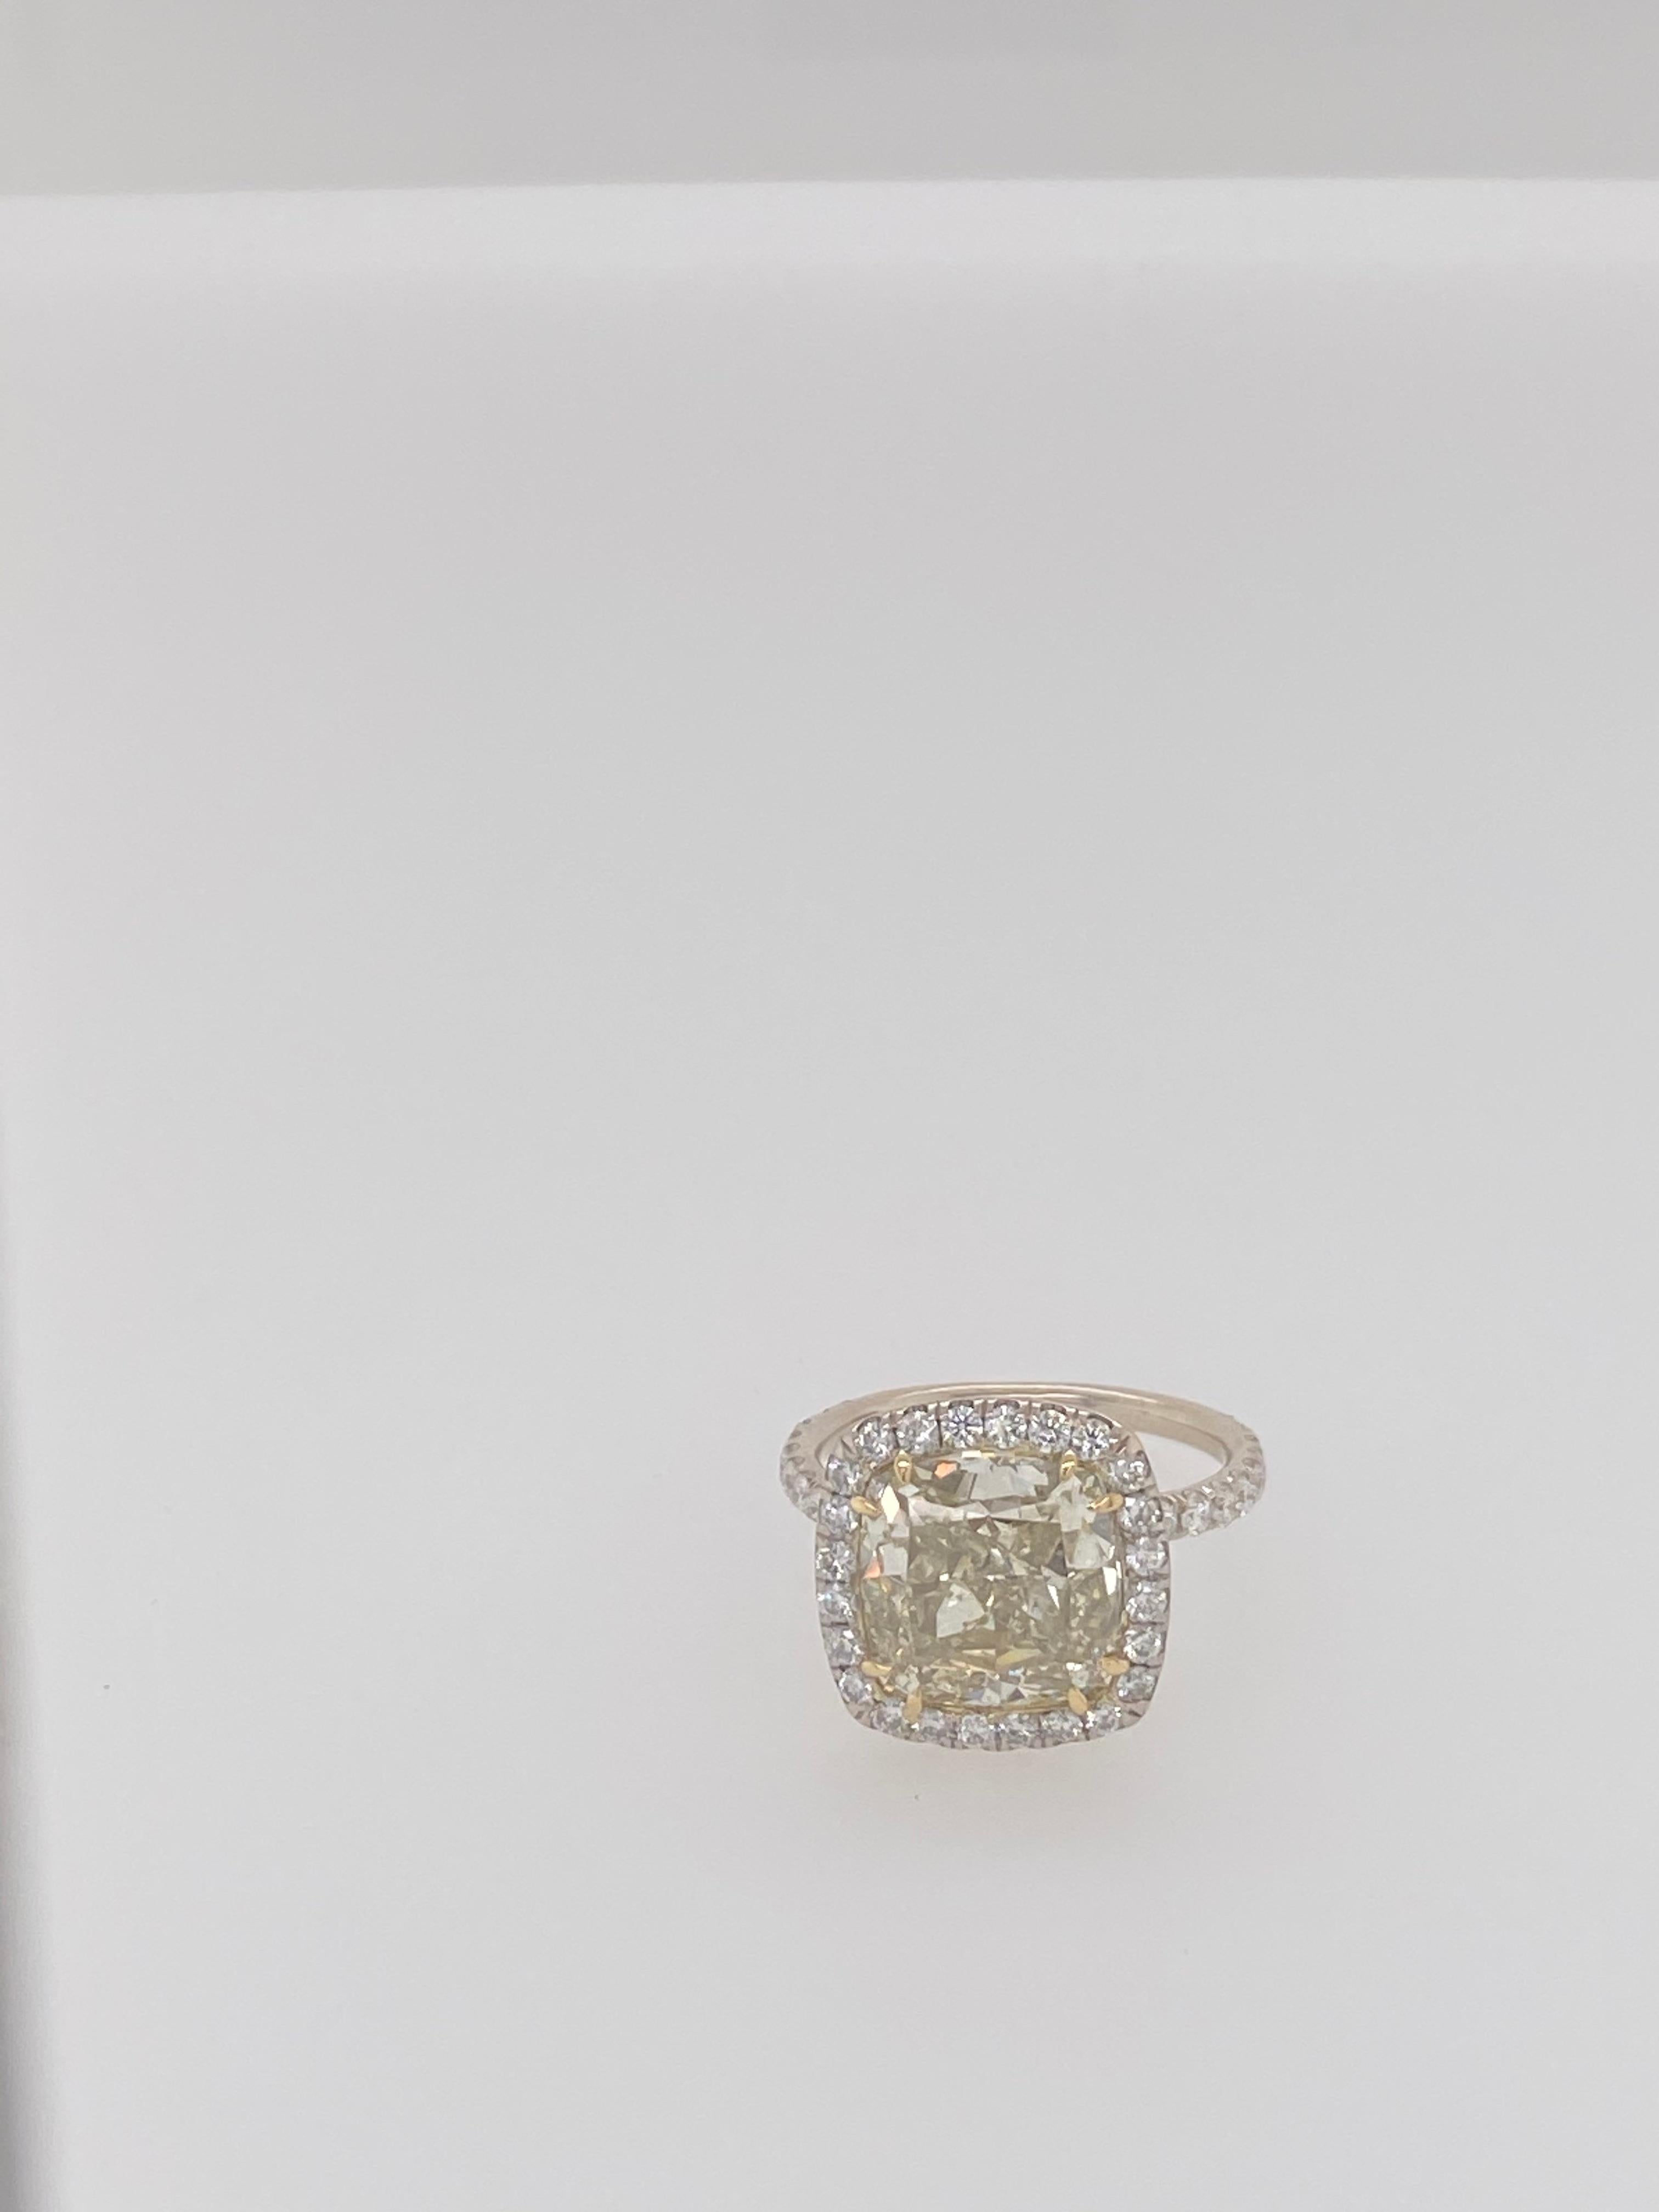 Cushion Cut GIA Certified 7 Plus Carat Fancy Yellow Diamond Engagement Ring